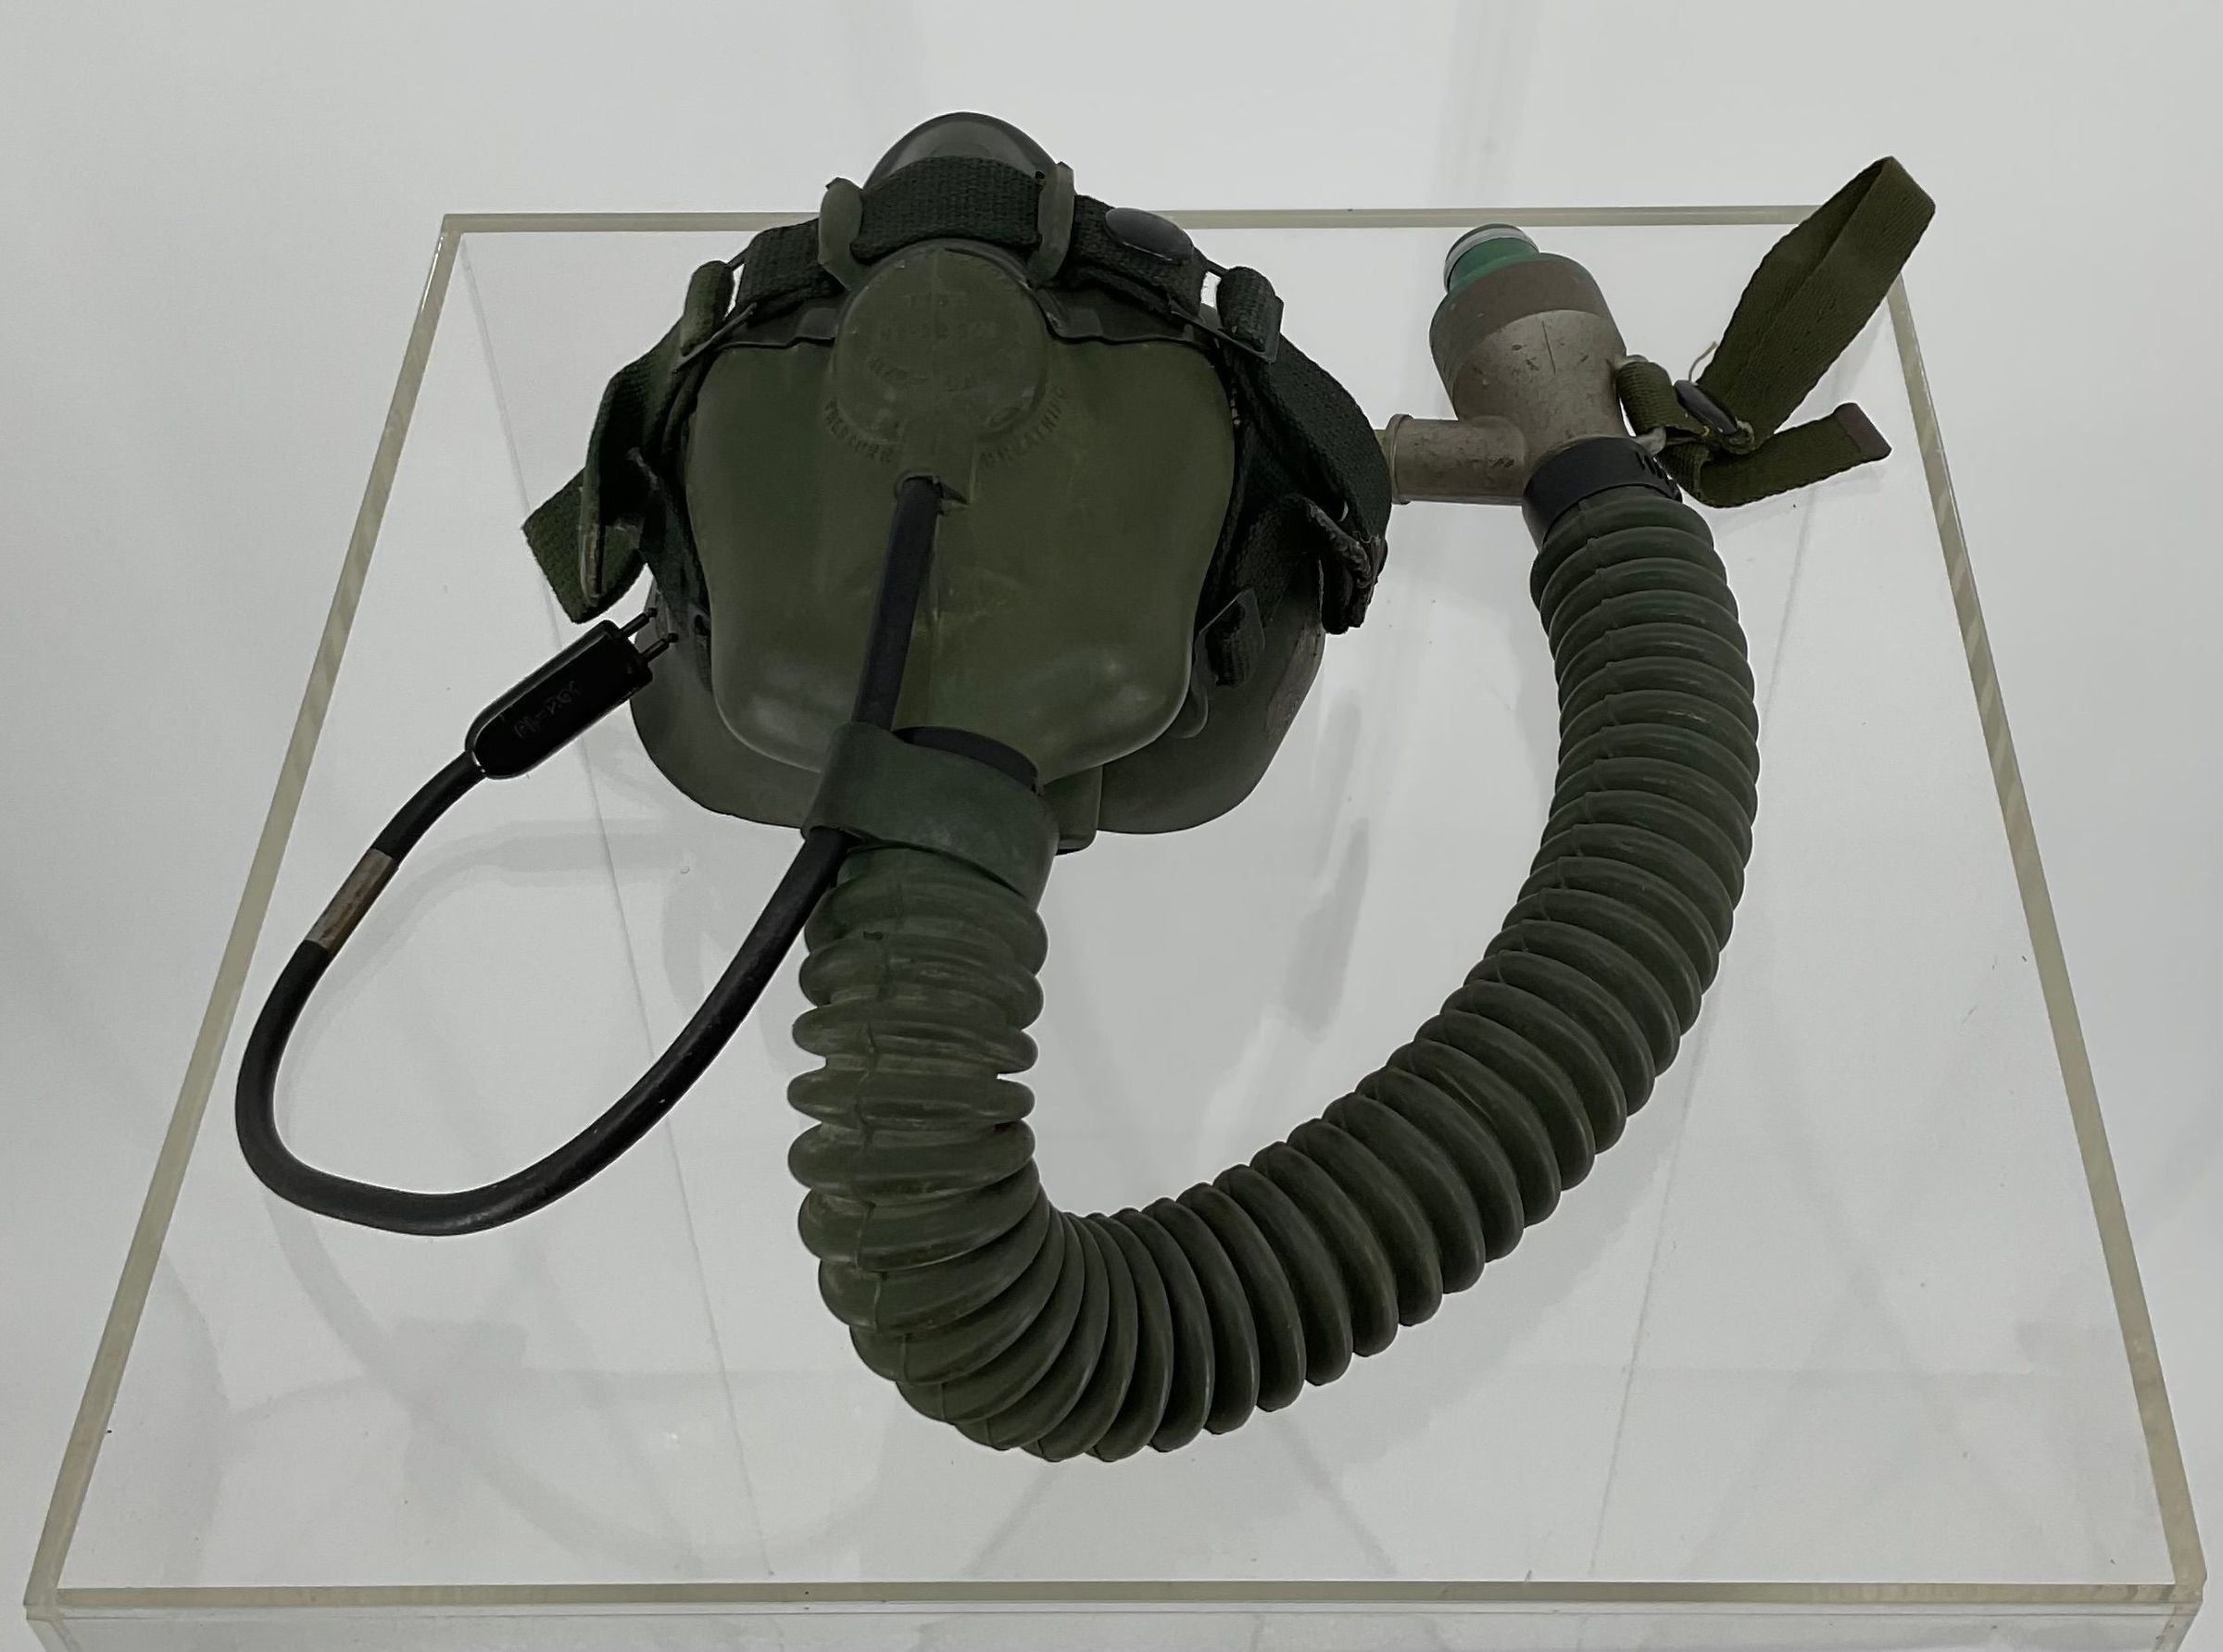 Primary Image of Aviator Oxygen Mask of Arnold McKechnie, Sr.